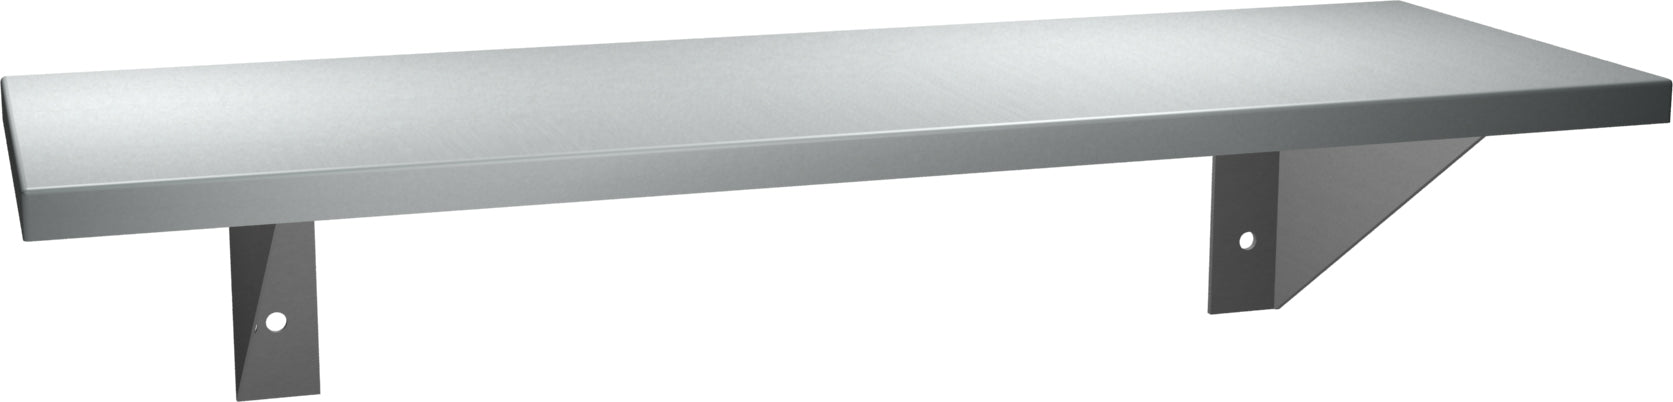 ASI 0692-660 Shelf, Stainless Steel, 6 X 60 Inch